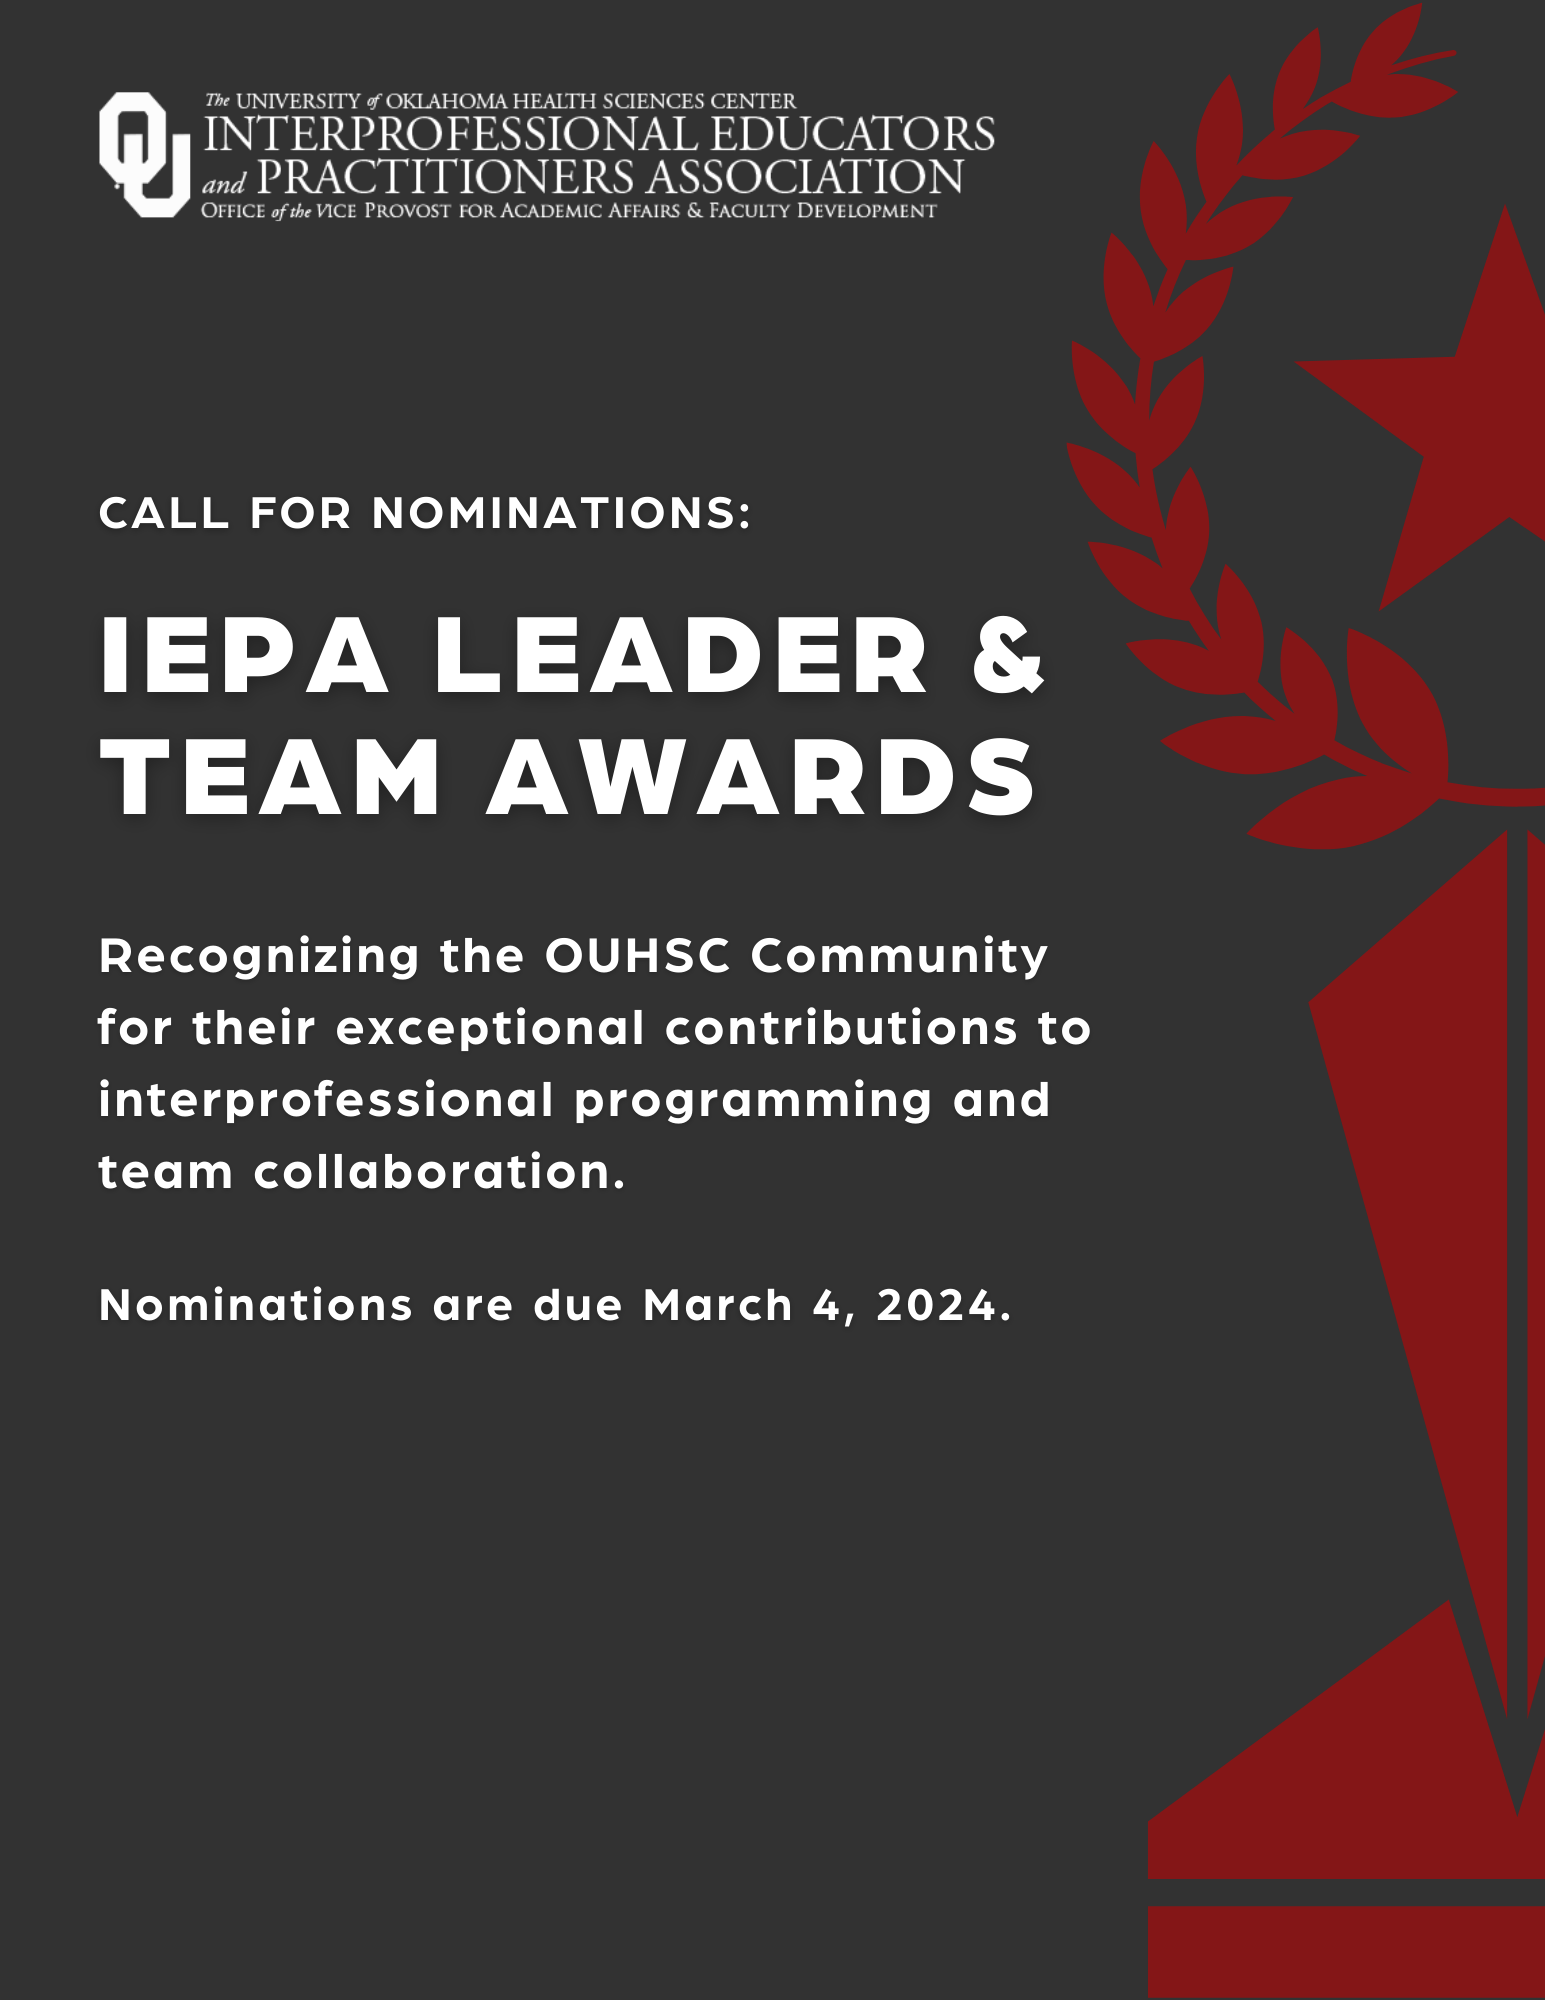 IPE Leader & Team Awards